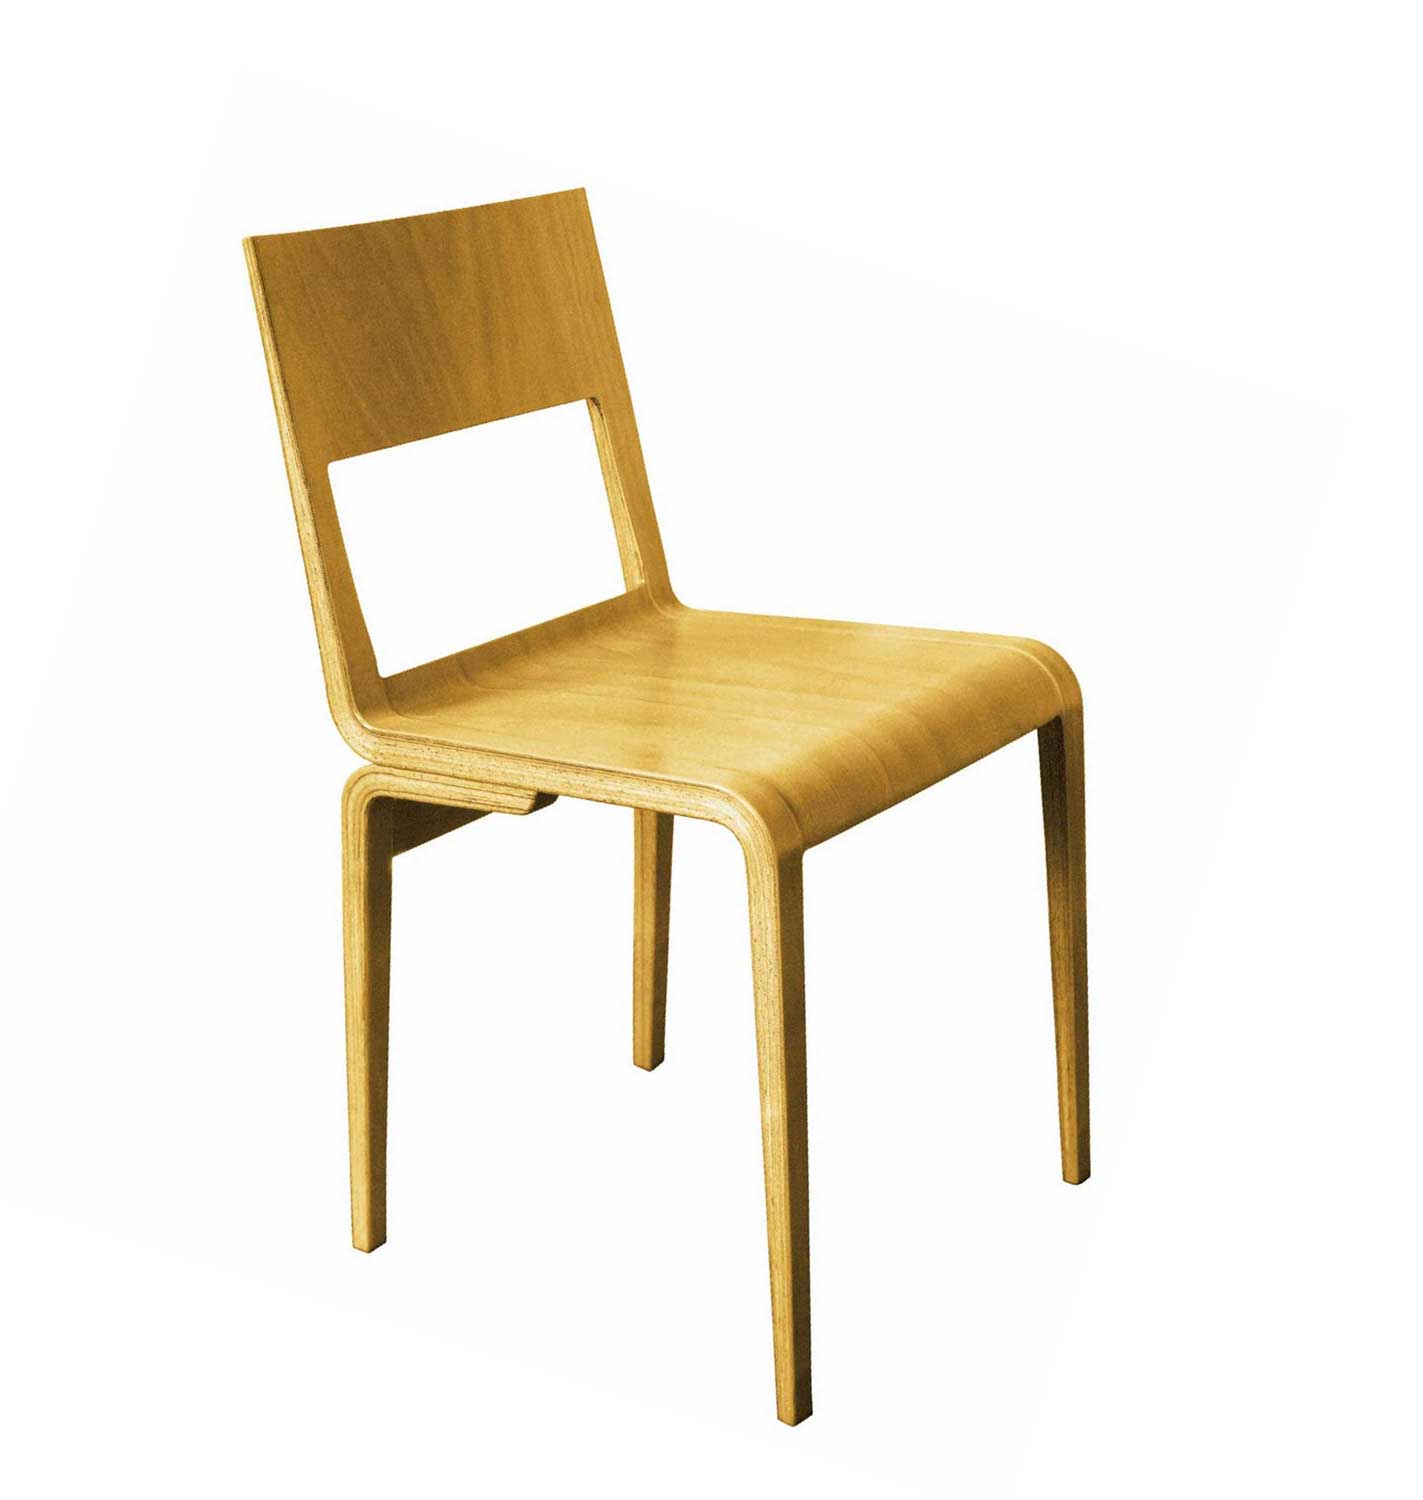 Foto, farbig: Stuhl aus Holz.